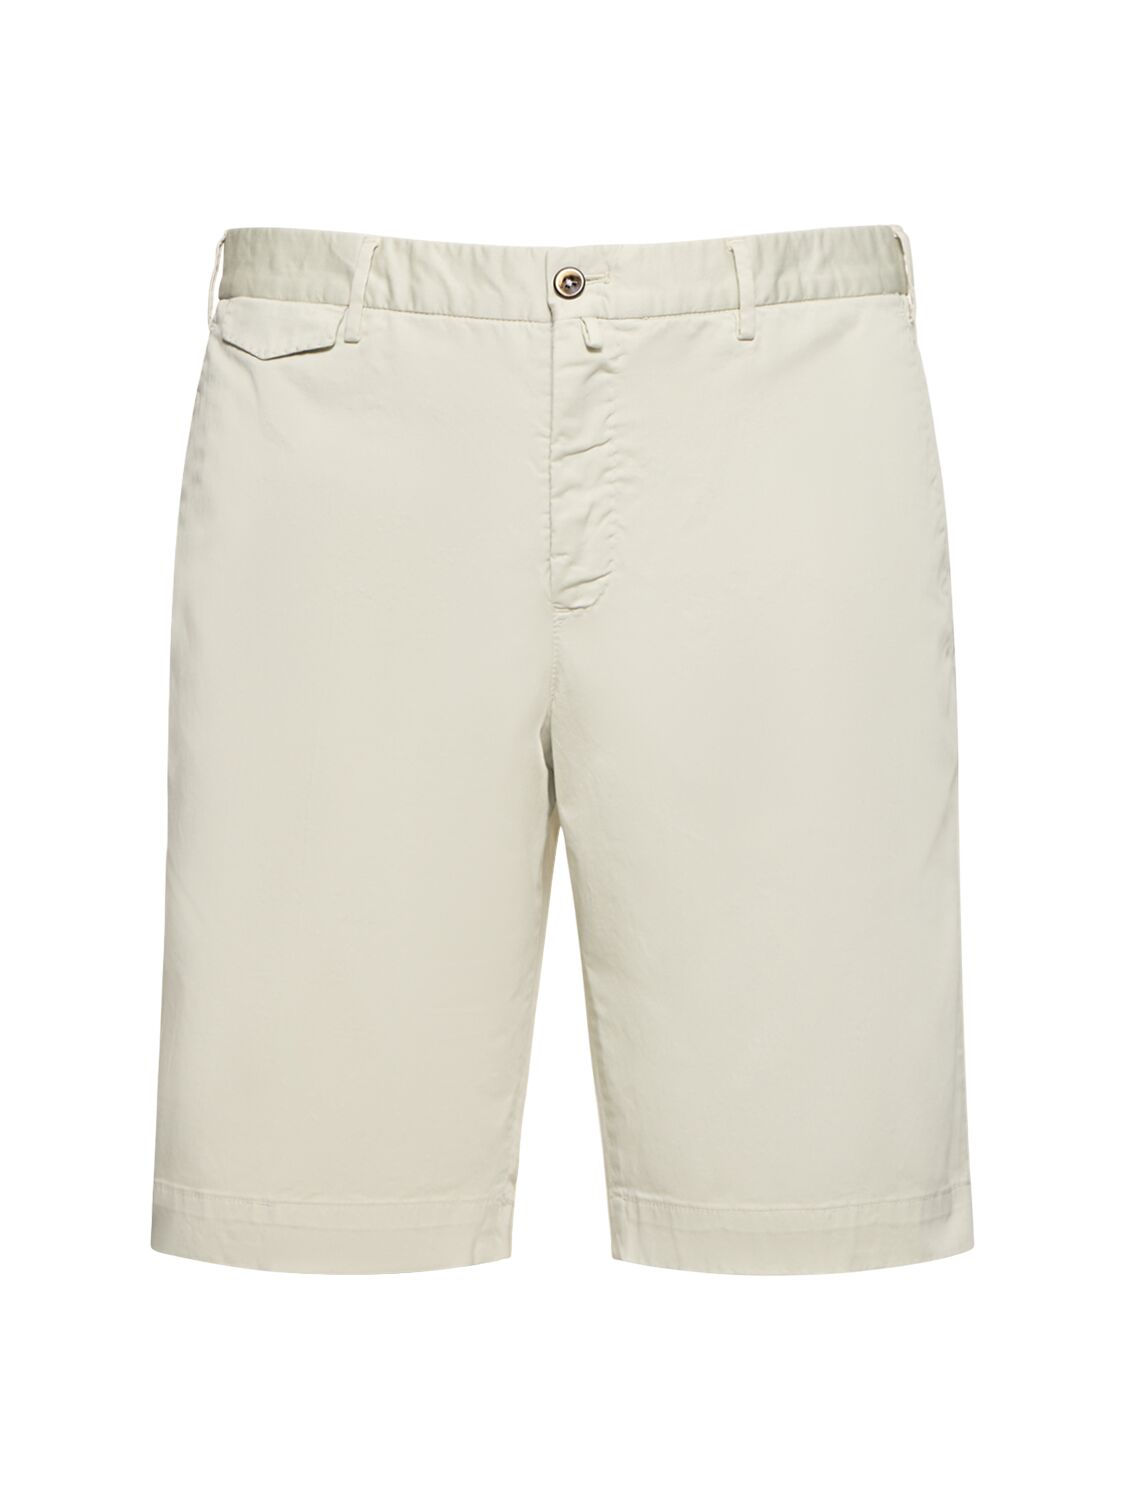 Image of Stretch Cotton Bermuda Shorts